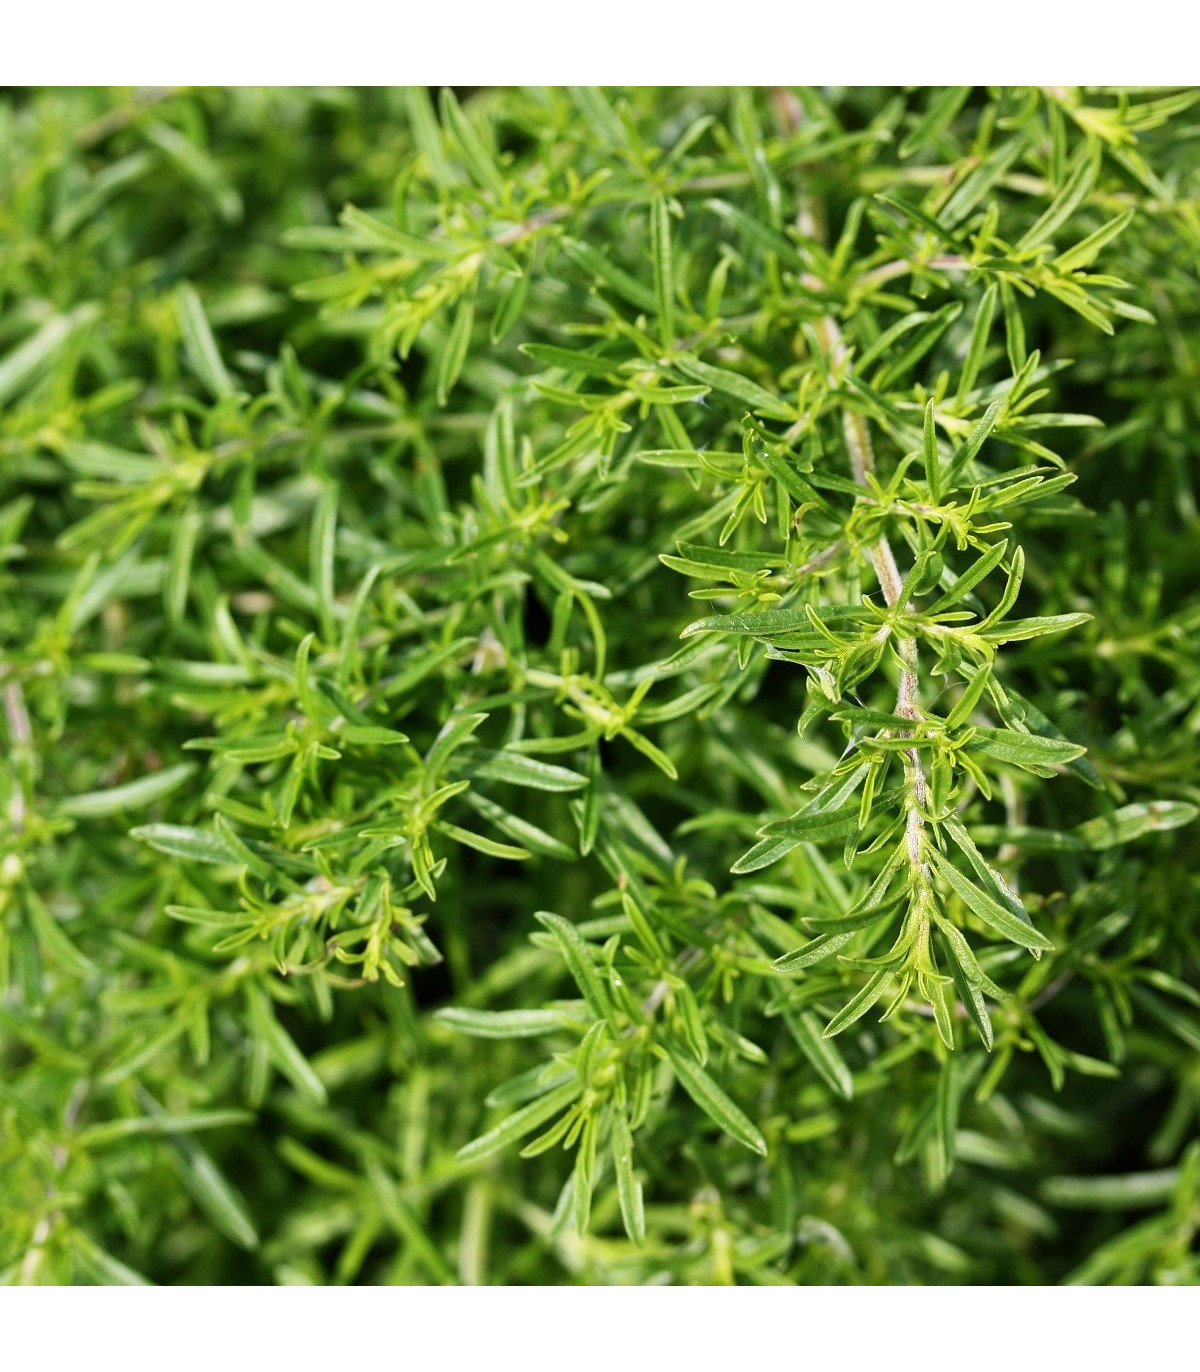 BIO saturejka záhradná - Satureja hortensis - bio semená saturejky - 1 g